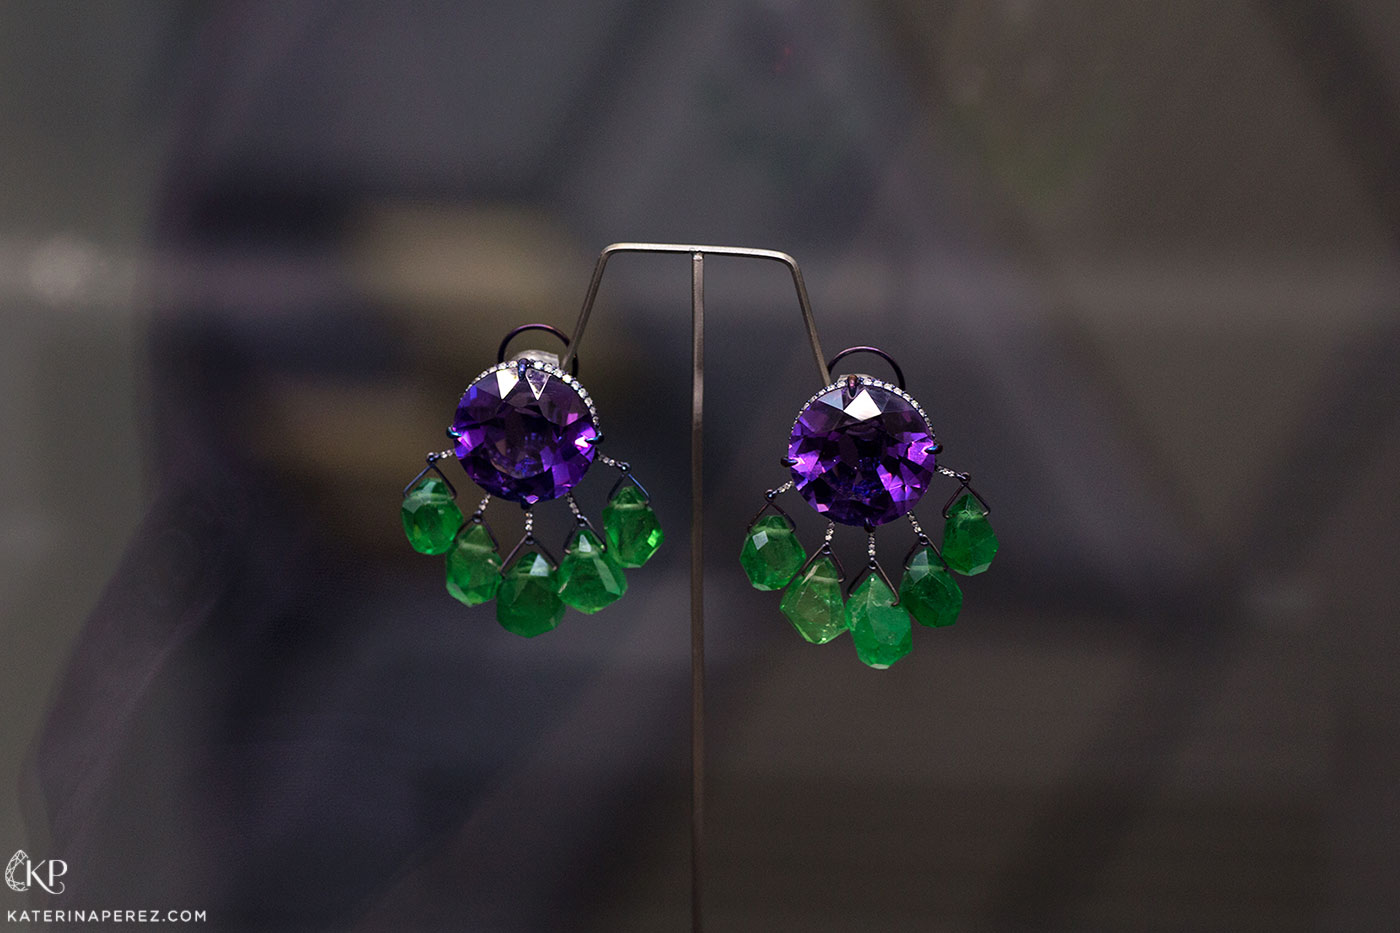 Ninotchka earrings with amethysts and tsavorite garnets